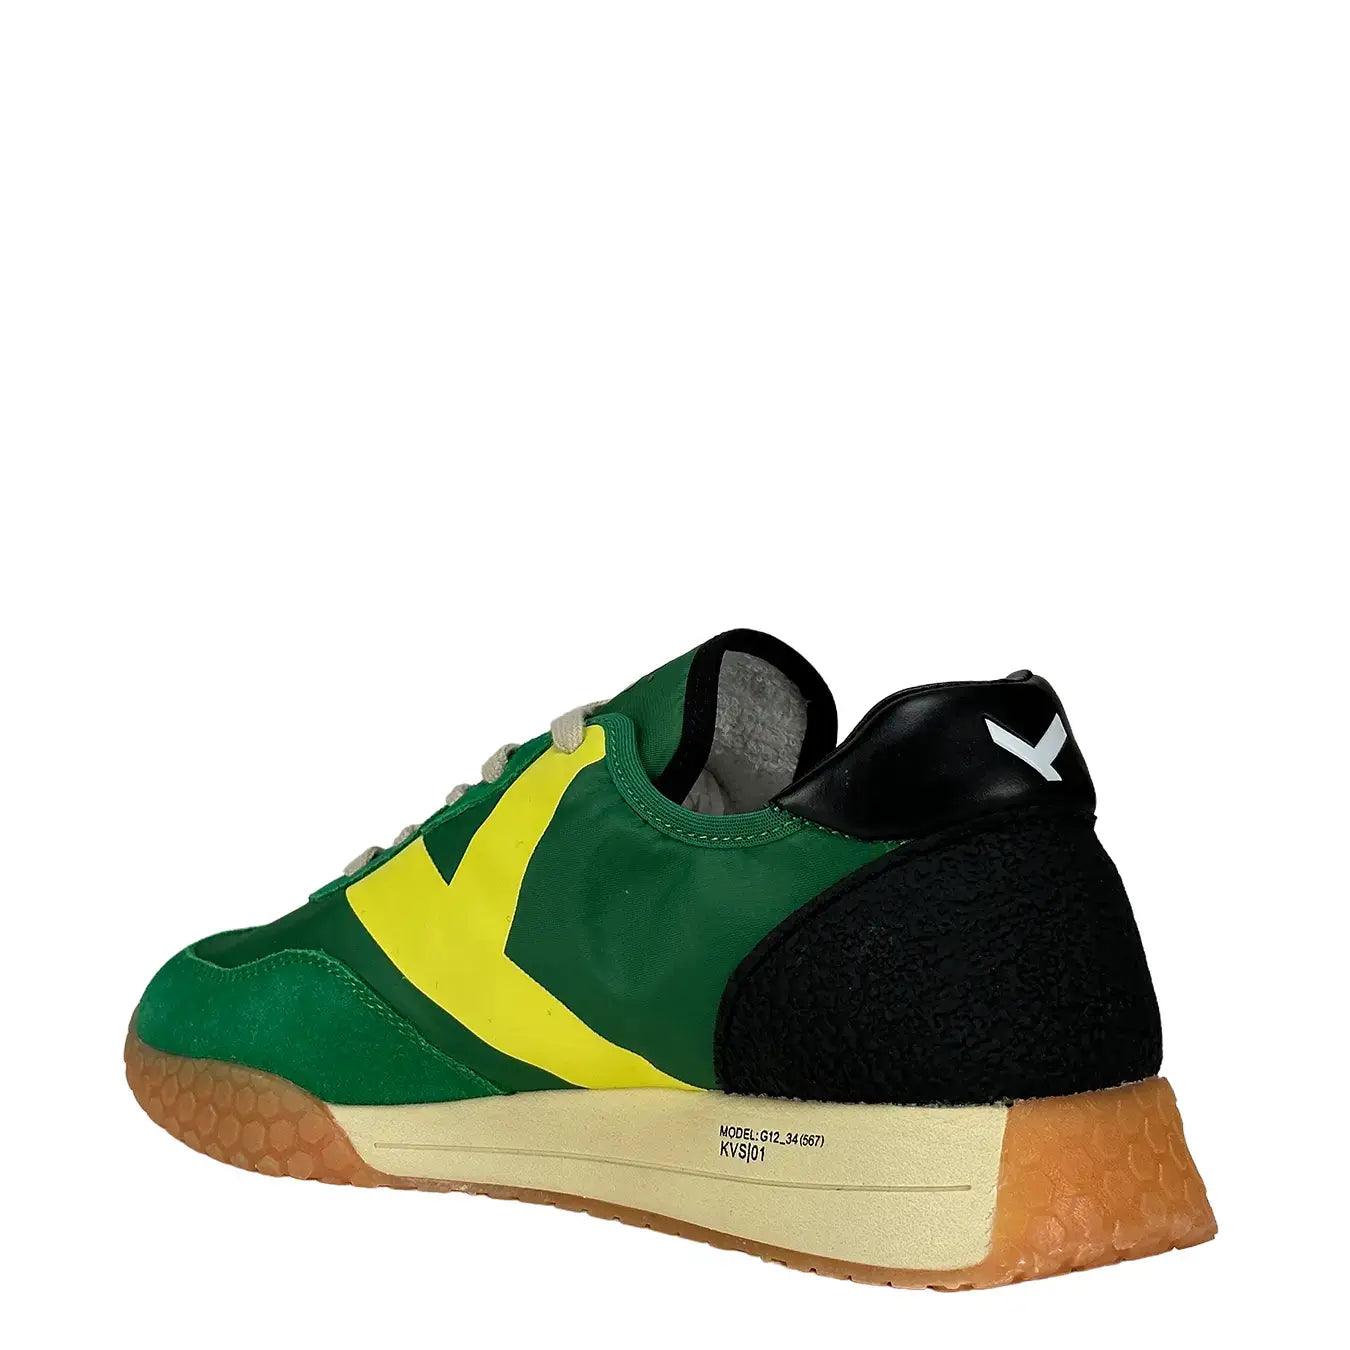 keh noo Sneakers, Km9313, Logo Bianco, Green Wht, Bassiniboutique.it, 2023 p/e